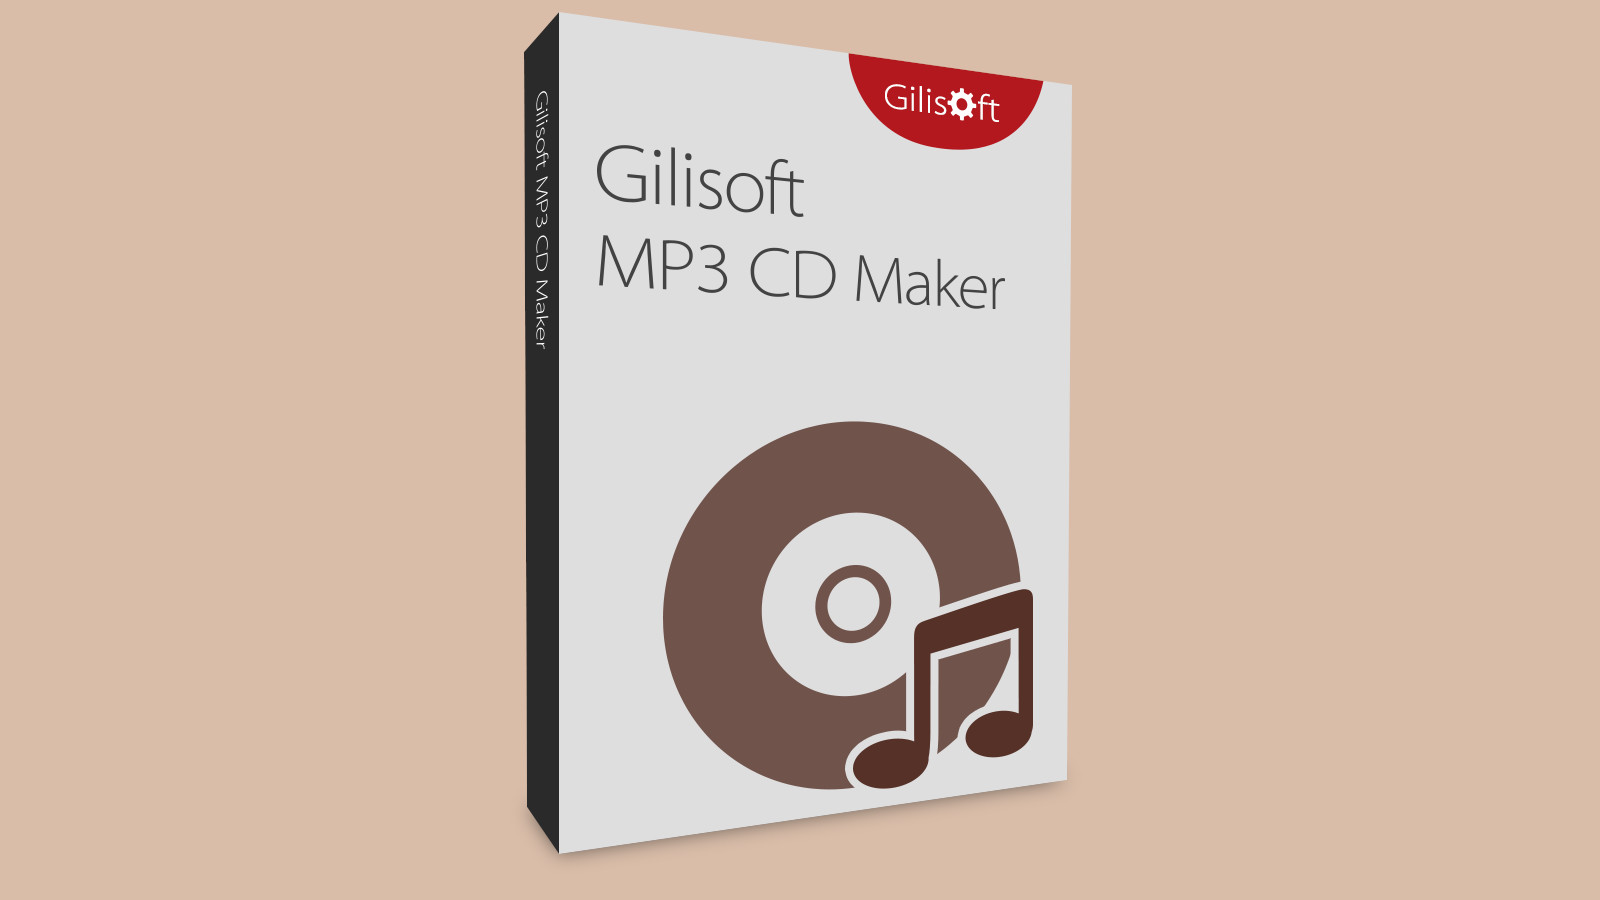 Gilisoft MP3 CD Maker CD Key 5.65 $